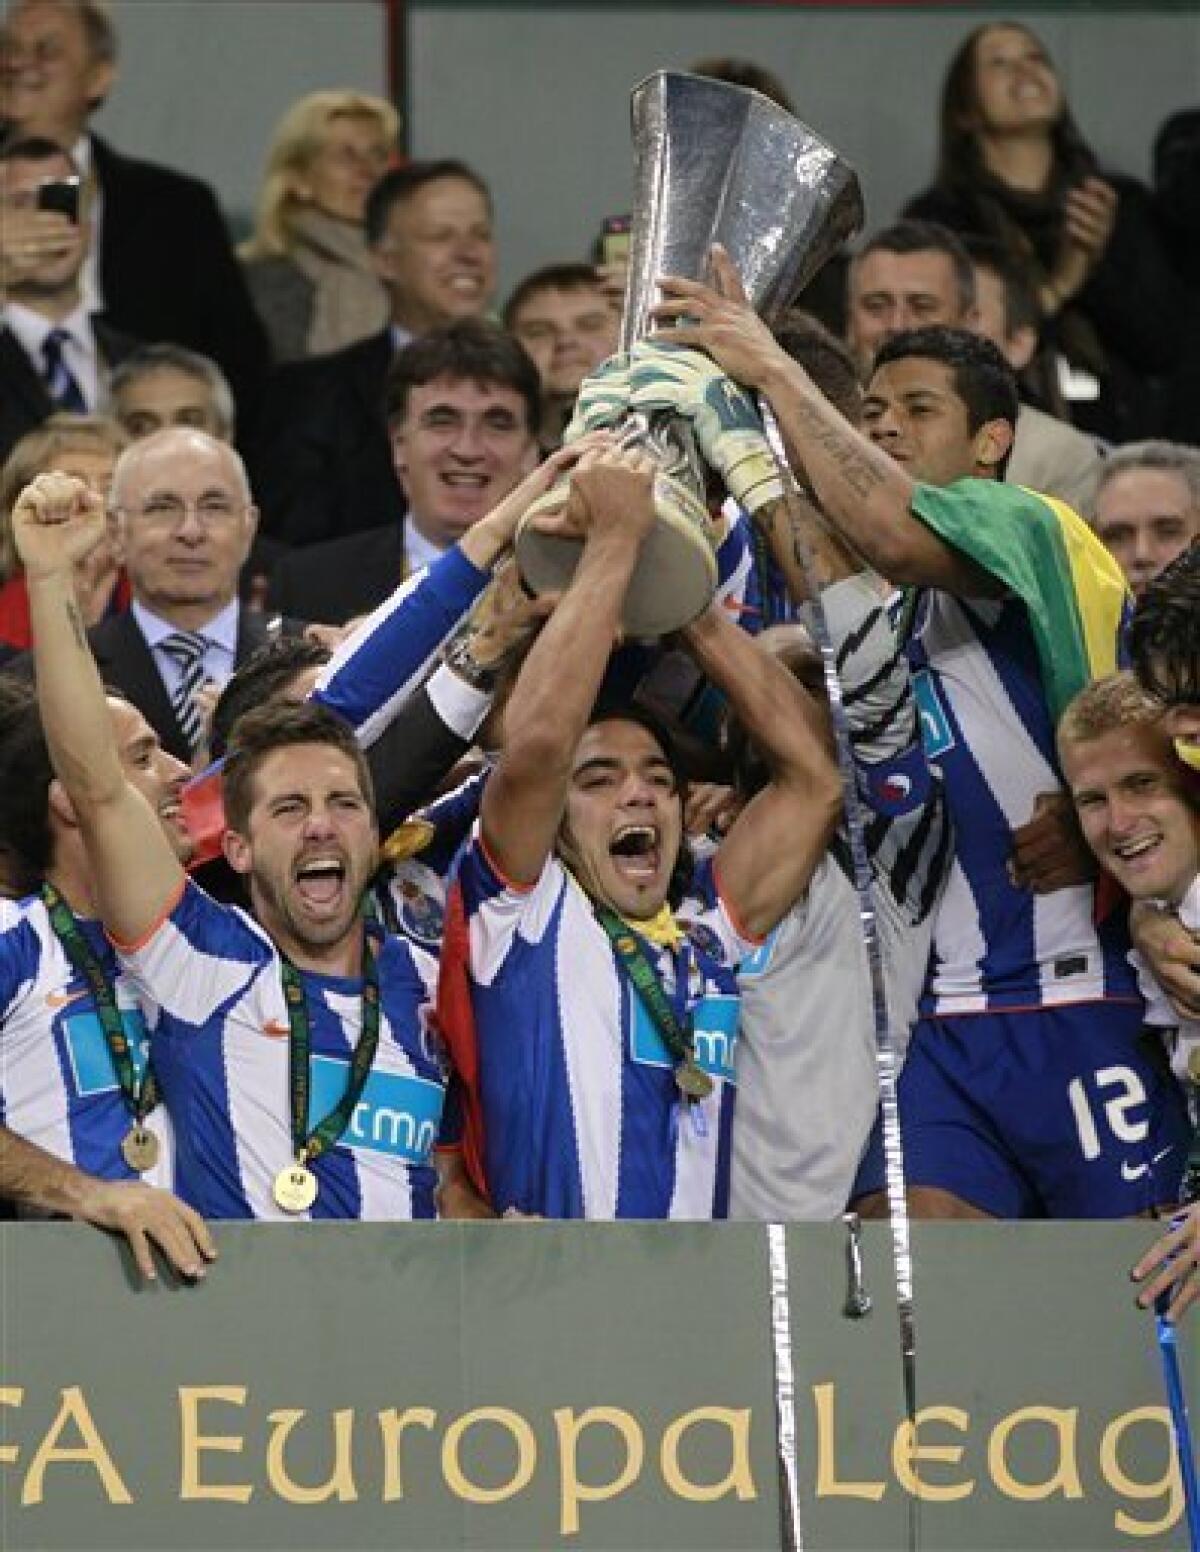 Porto beats Braga 1-0 in Europa League final - The San Diego Union-Tribune